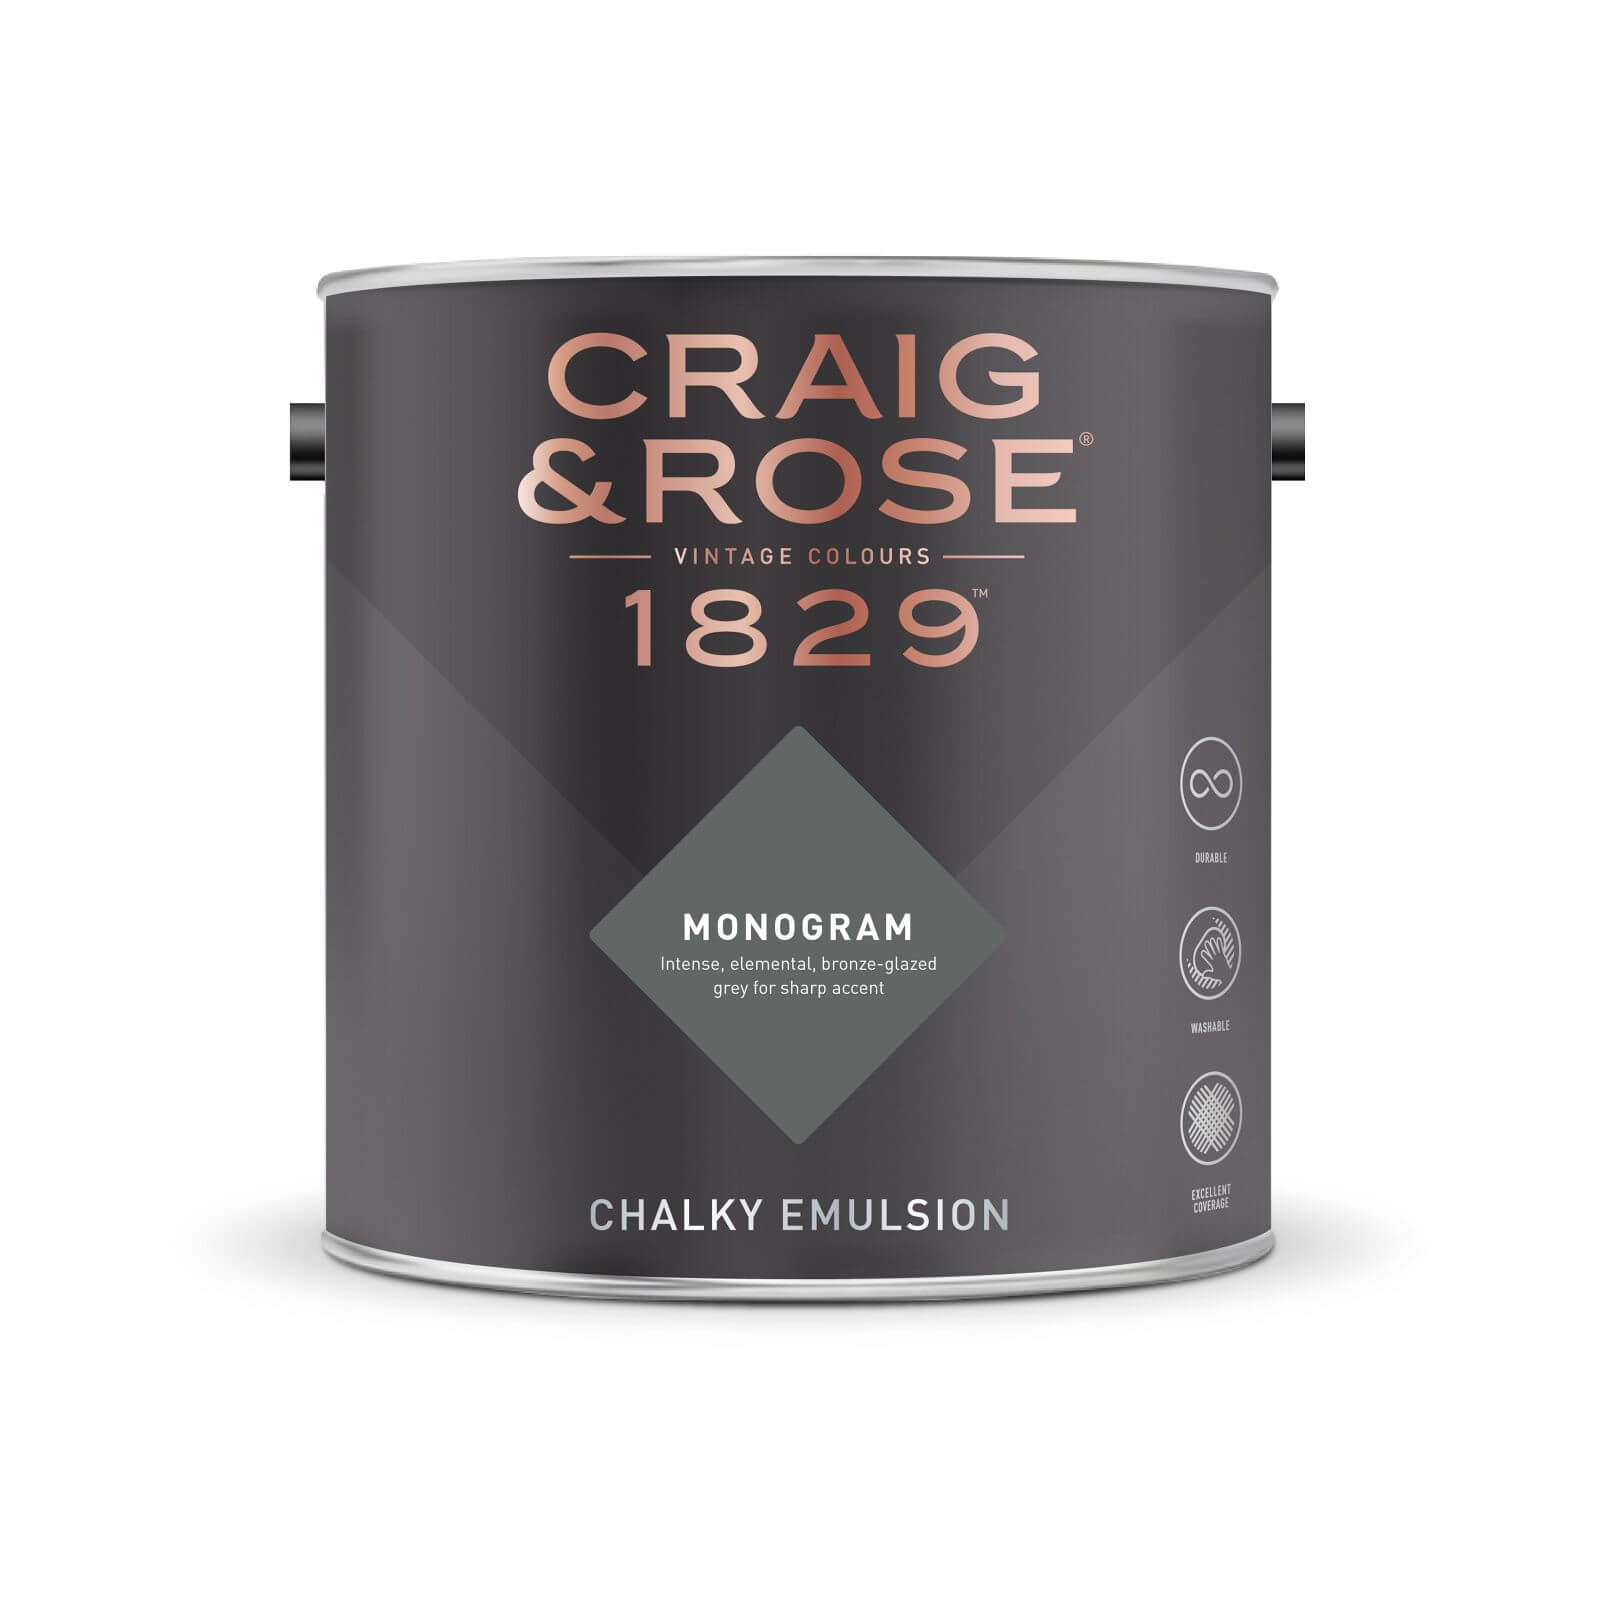 Craig & Rose 1829 Chalky Emulsion Paint Monogram - 5L